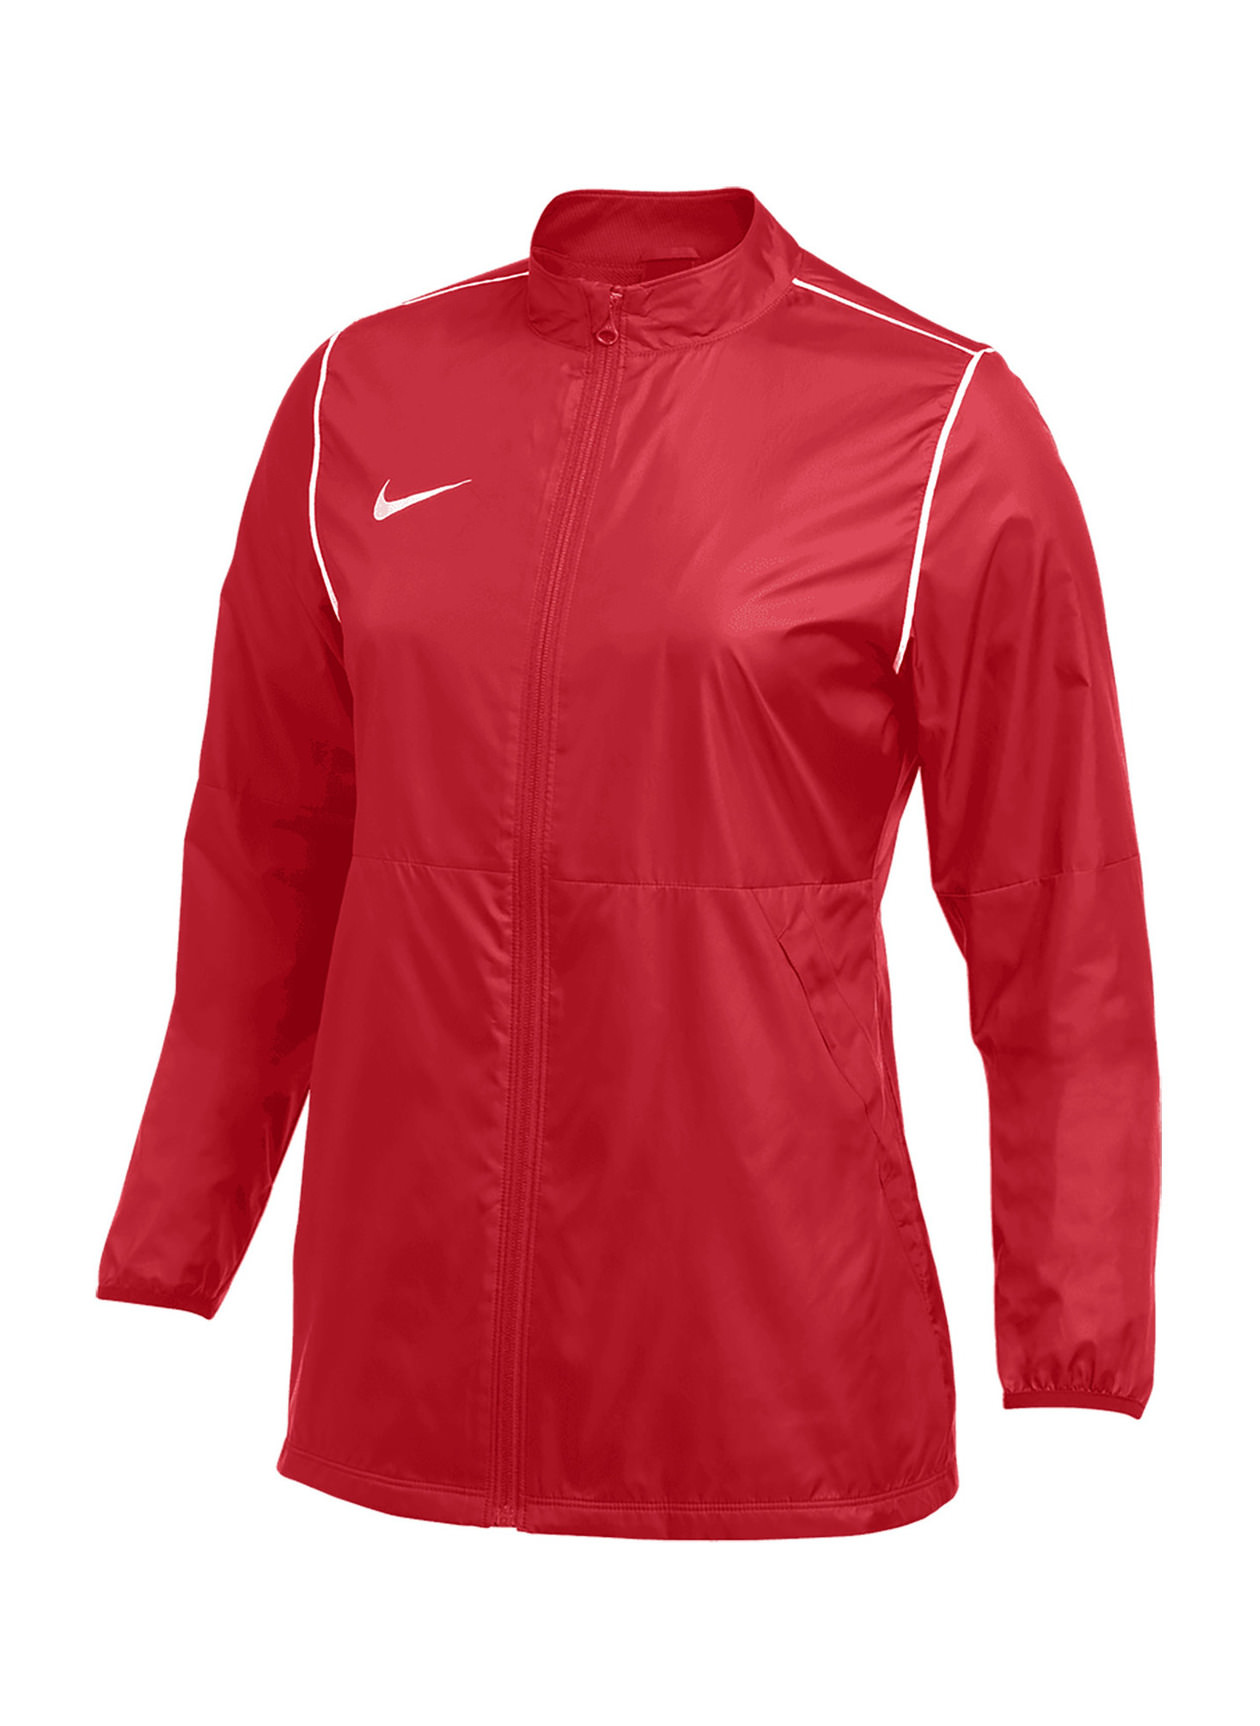 Nike Women's University Red Park20 Jacket